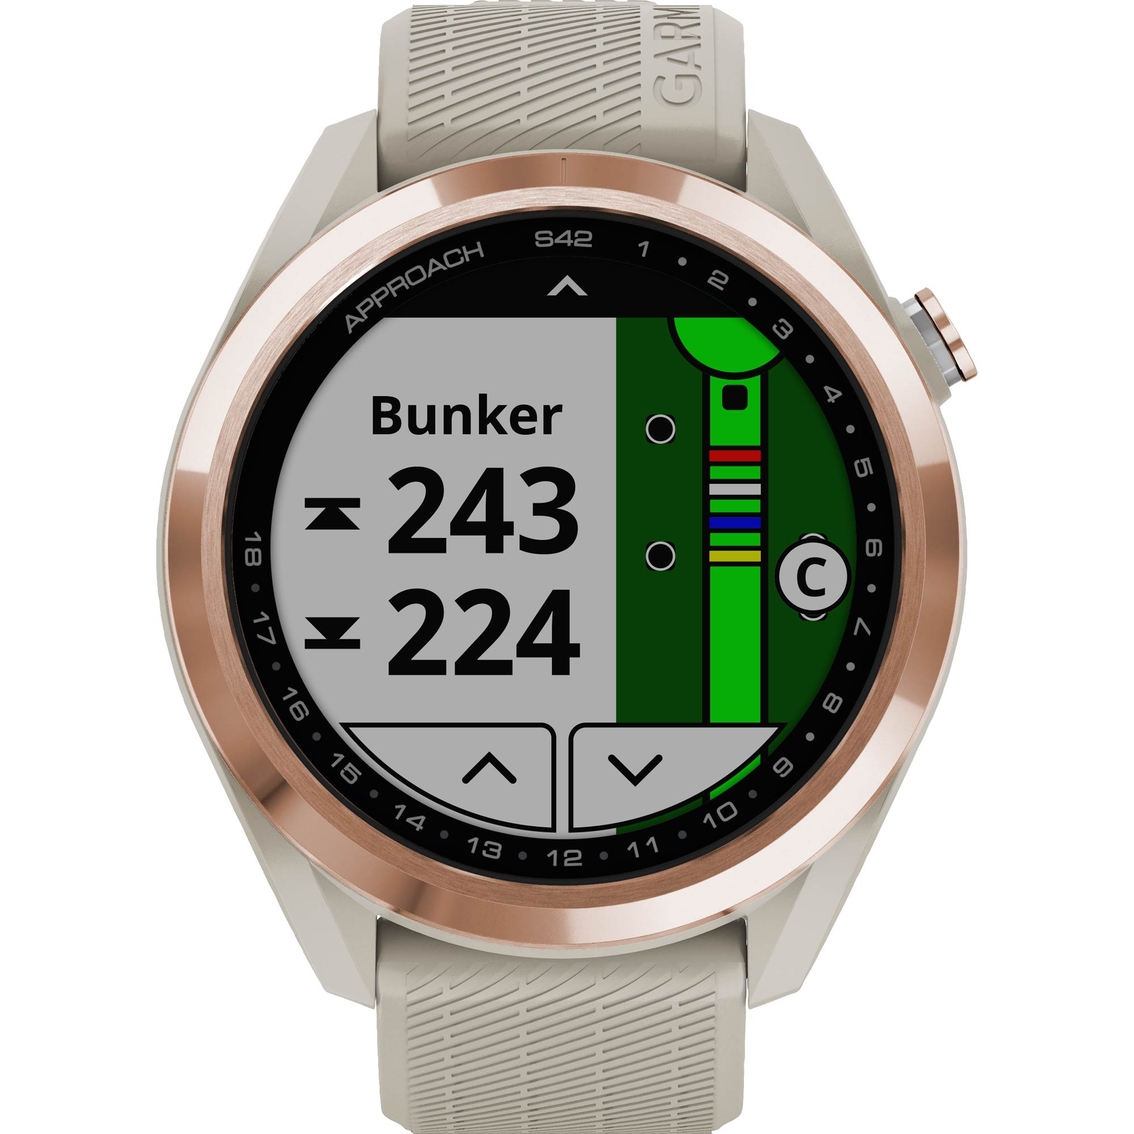 Garmin Approach S42 GPS Golf Smartwatch - Image 3 of 5